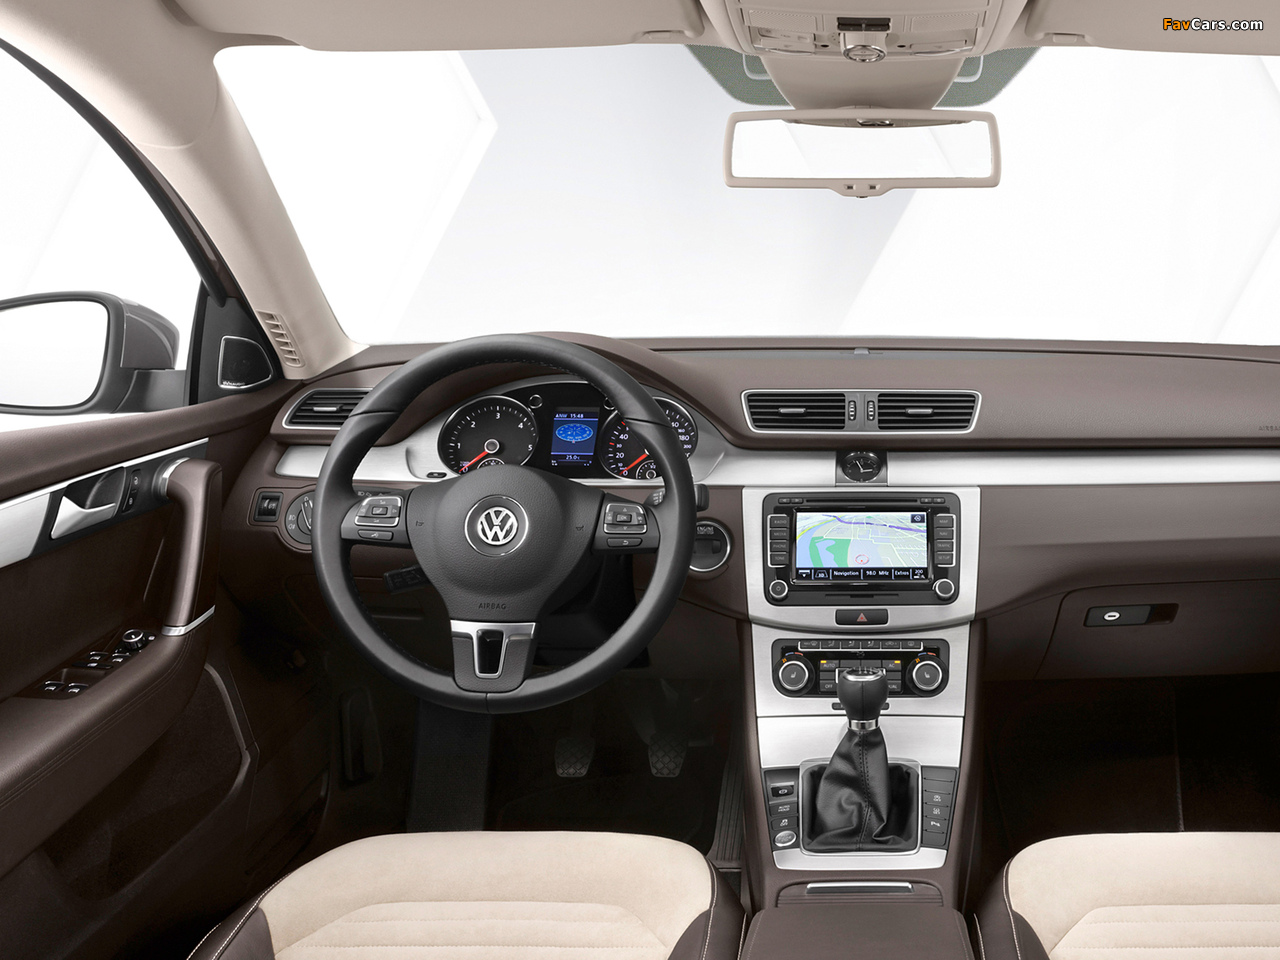 Volkswagen Passat TSI (B7) 2010 images (1280 x 960)